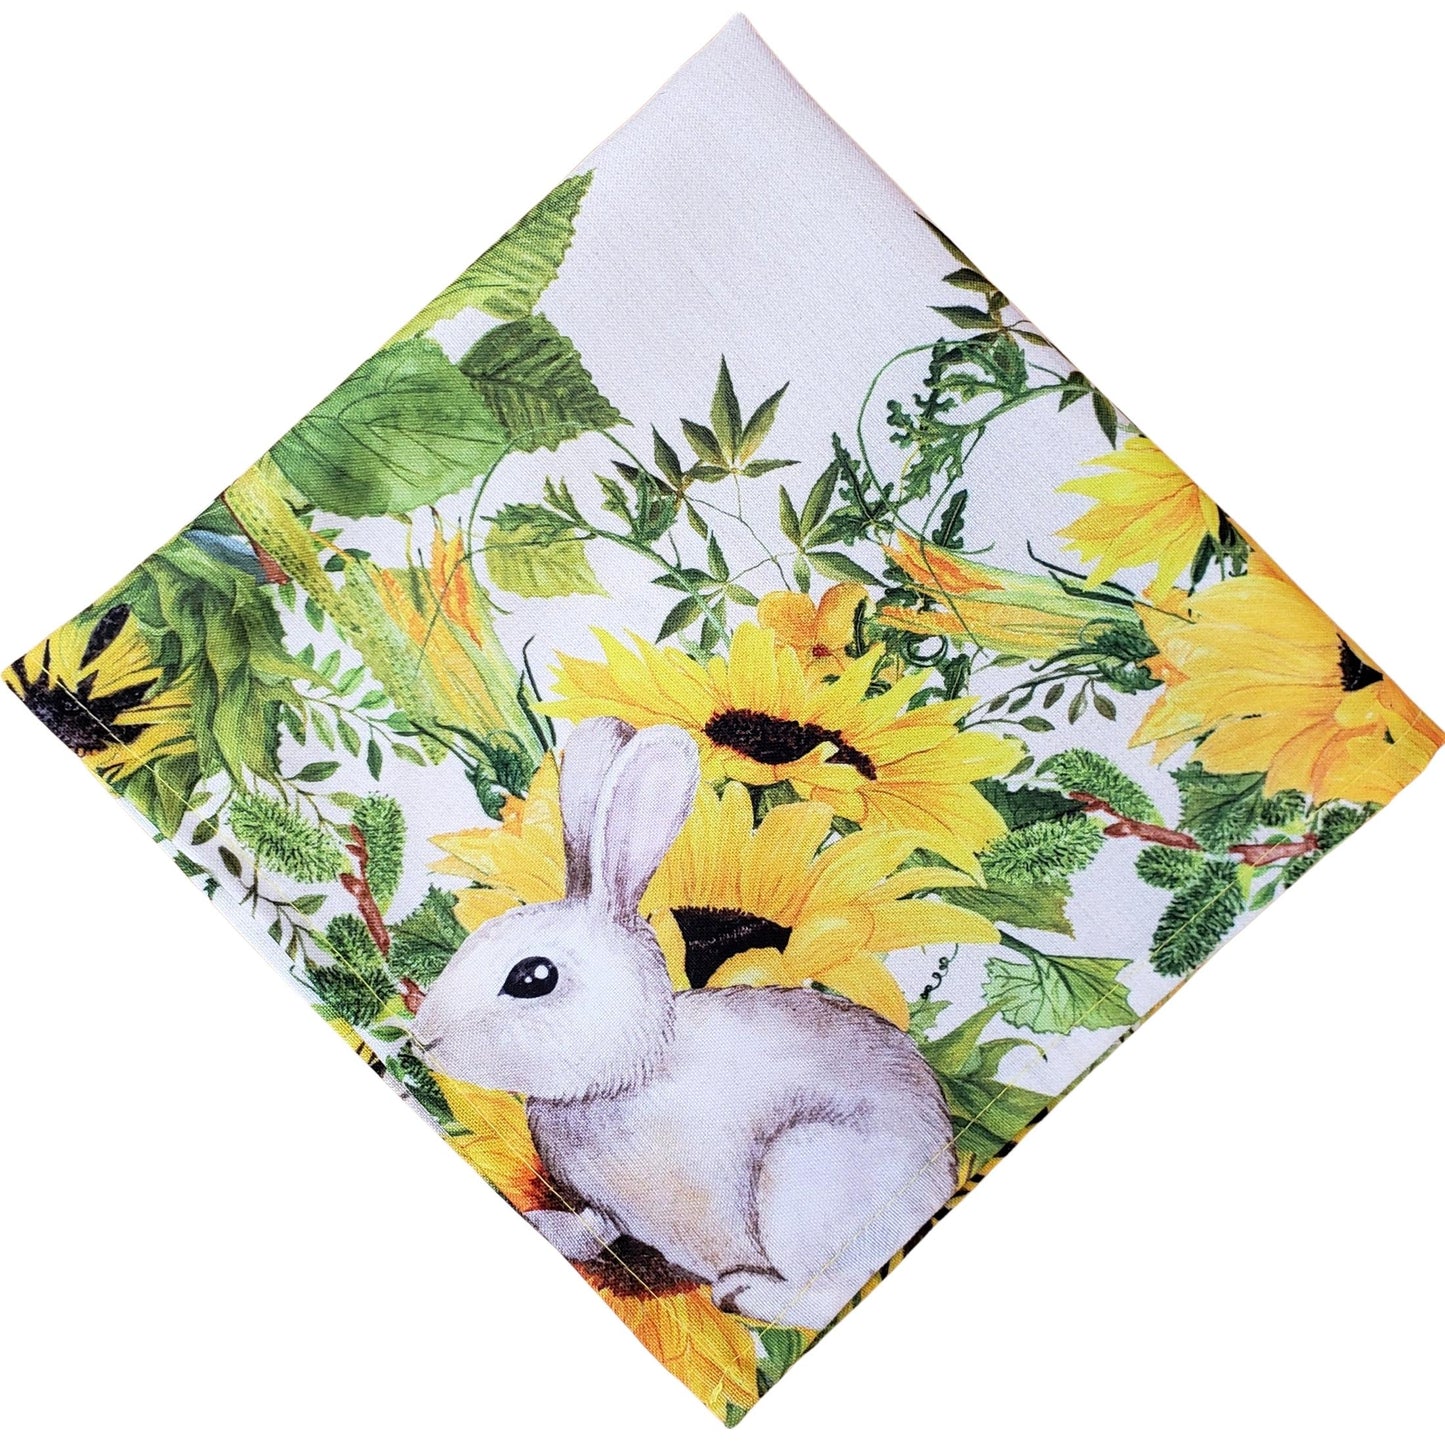 Charlo's Easter Cloth Napkinsit Sunflower Eggs Reusable Soft Durable Yellow